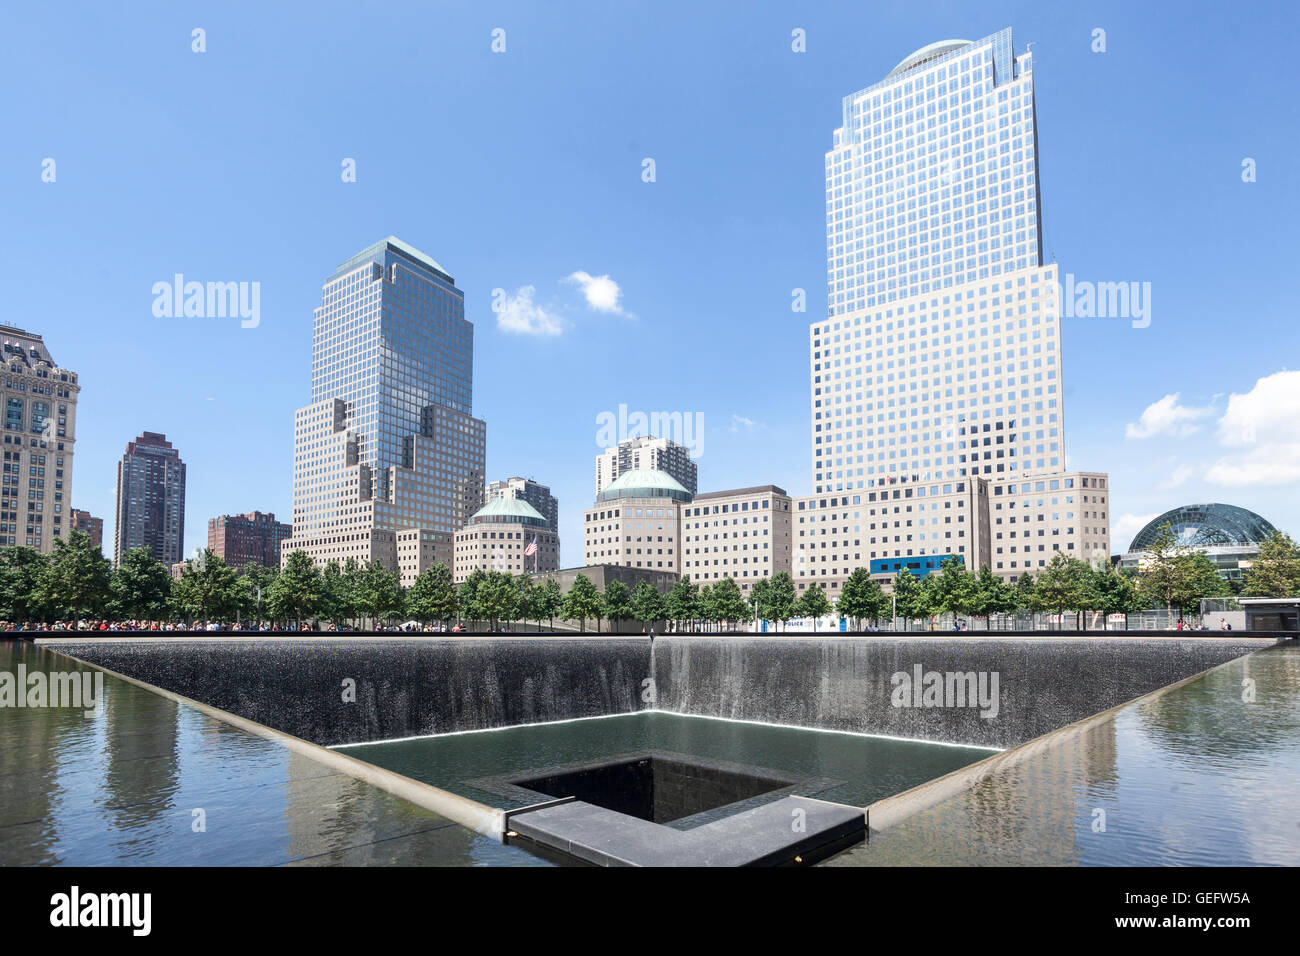 911 Memorial New York City Stock Photo